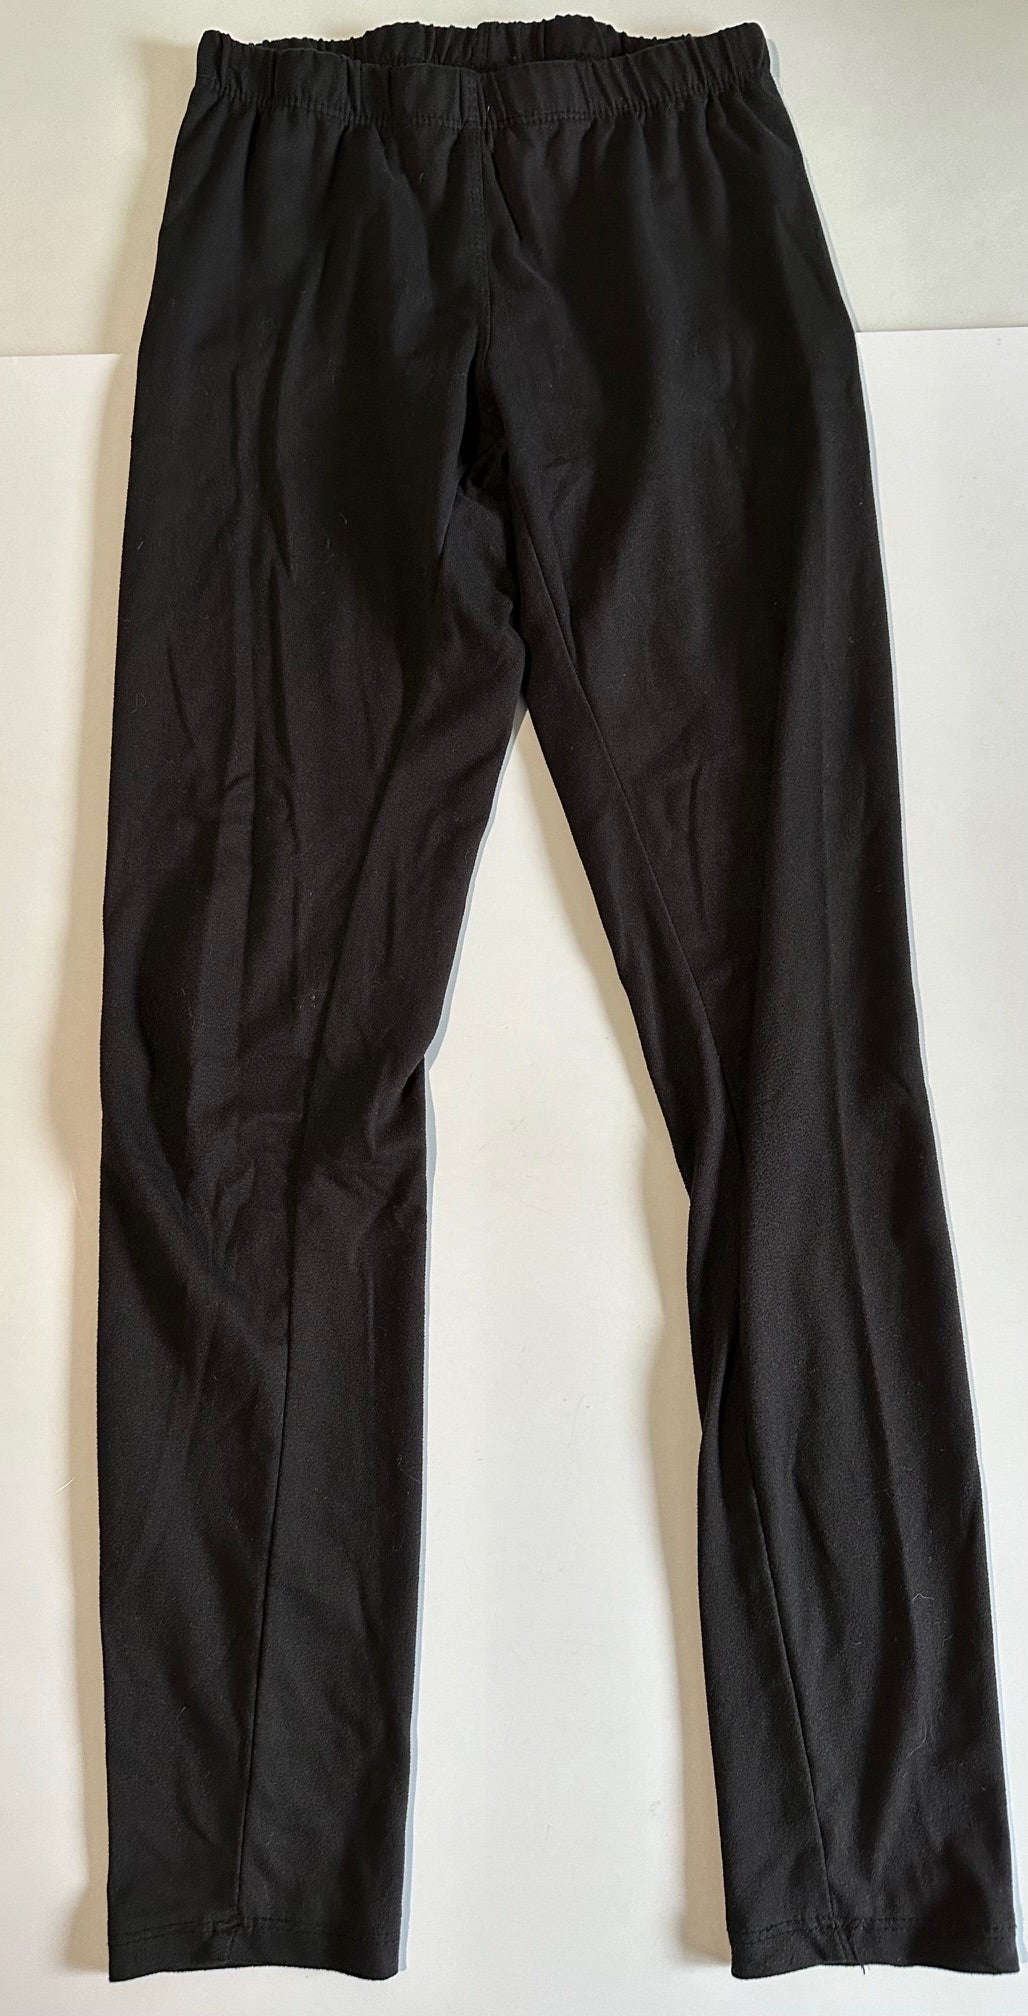 Lulu Luo, Soft Black Pants - Size 10/12